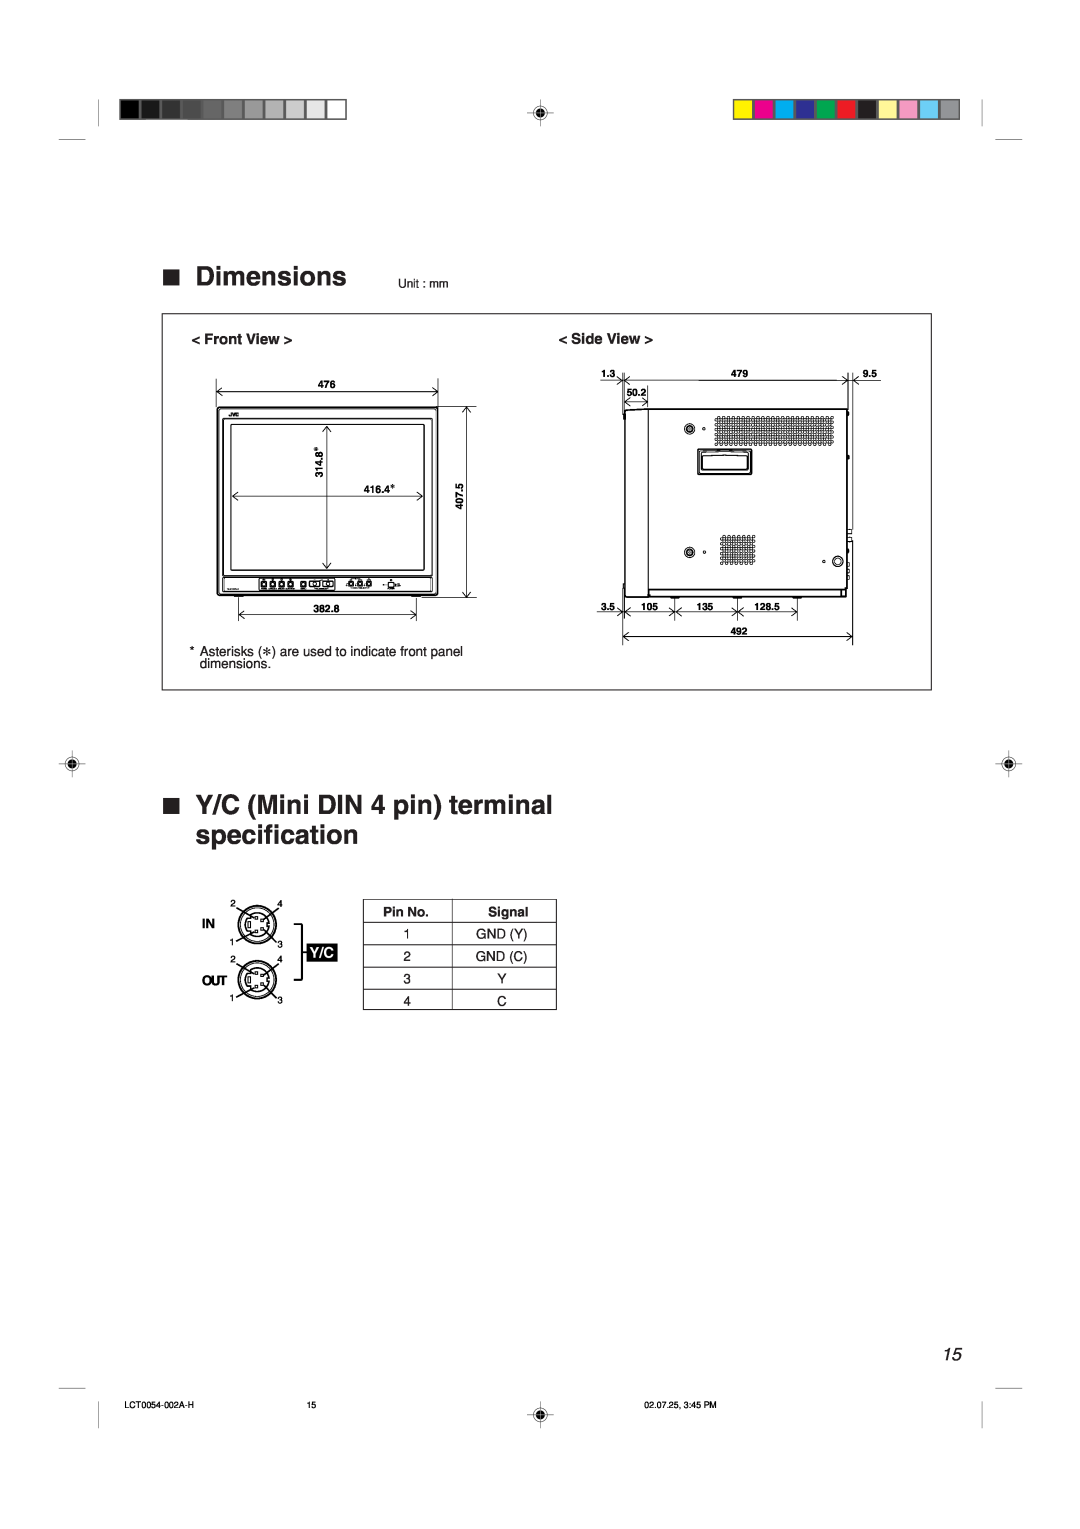 JVC TM-2100PN-K manual Dimensions, 7 Y/C Mini DIN 4 pin terminal specification, 50.2, 314.8, 407.5, 416.4, 382.8, 128.5 